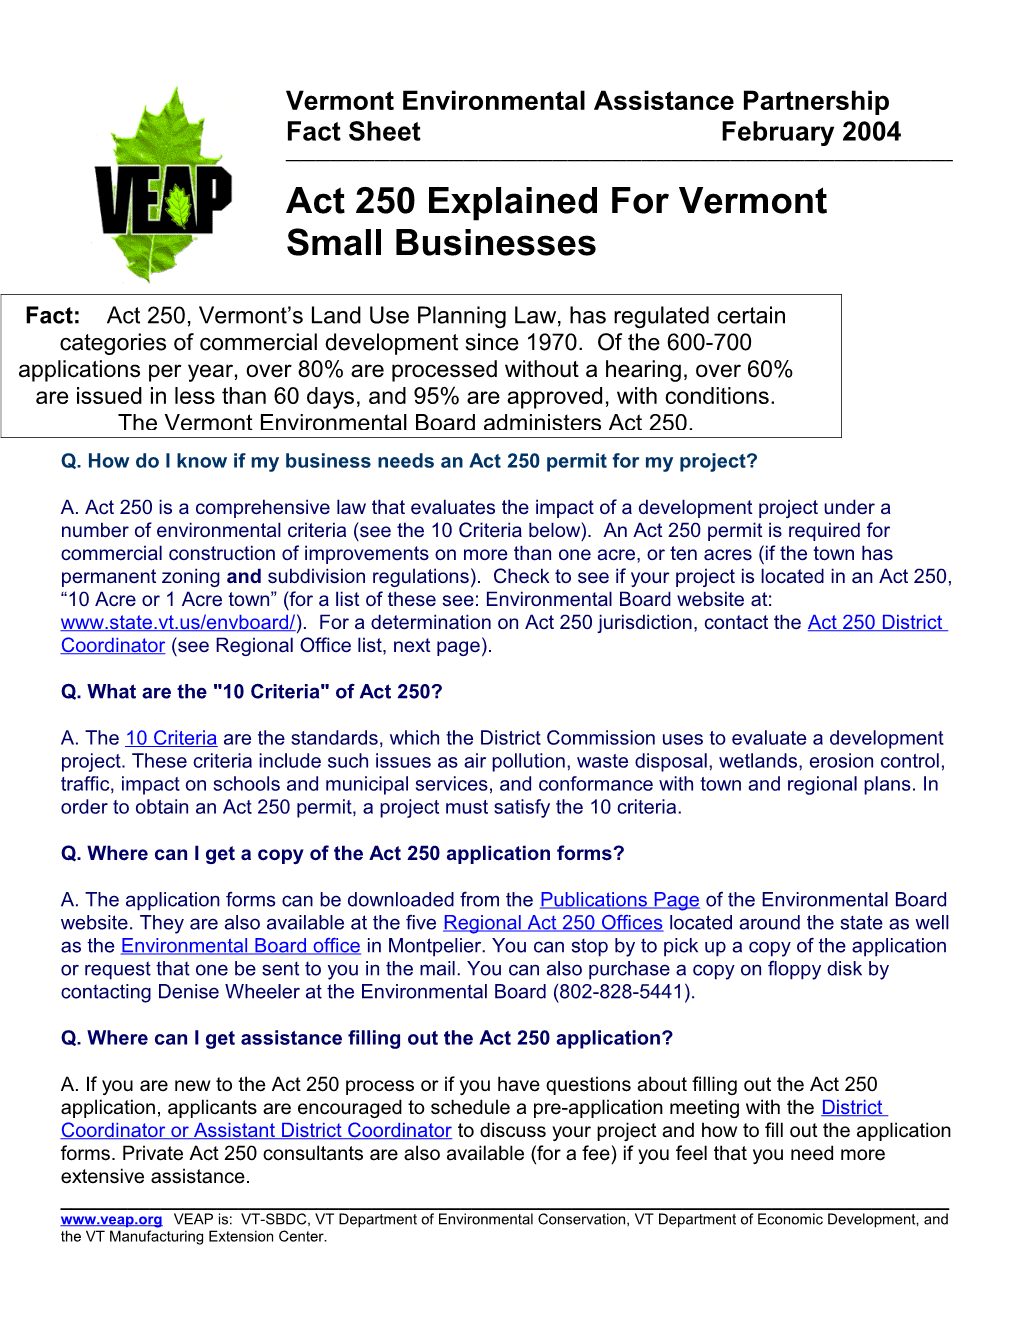 Vermont Environmental Assistance Partnership (VEAP)